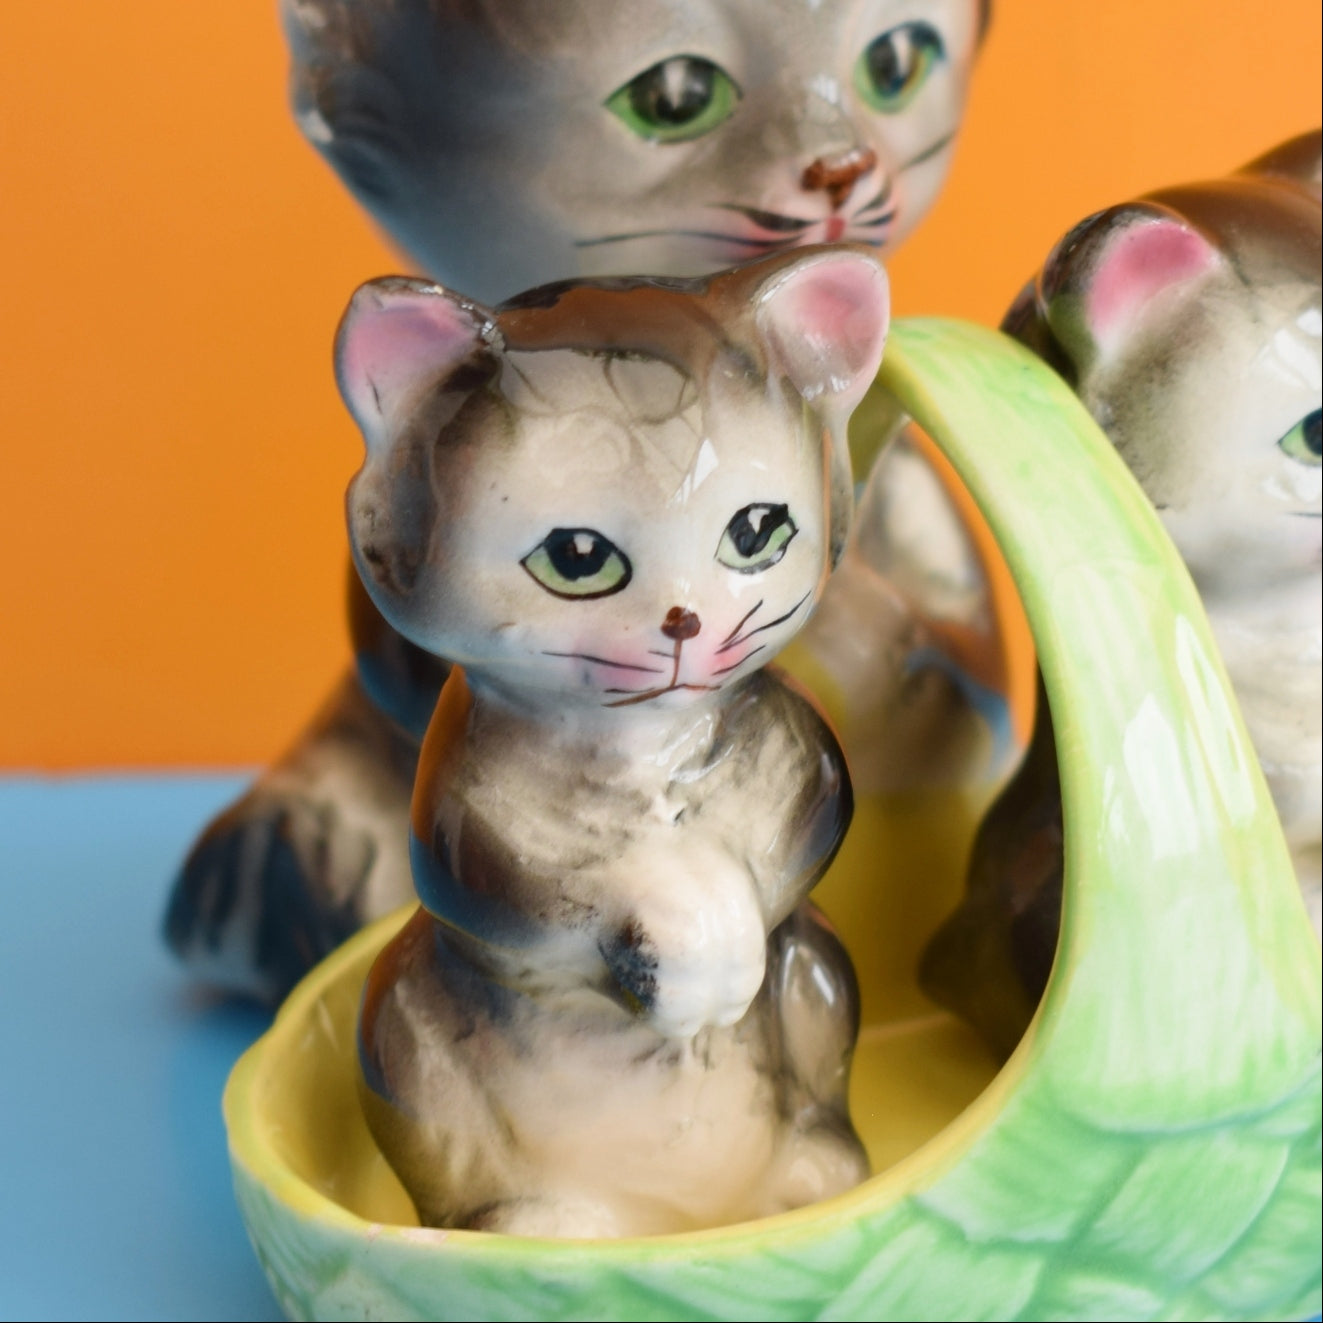 Vintage 1960s Kitsch Kitten / Cat Cruet Set